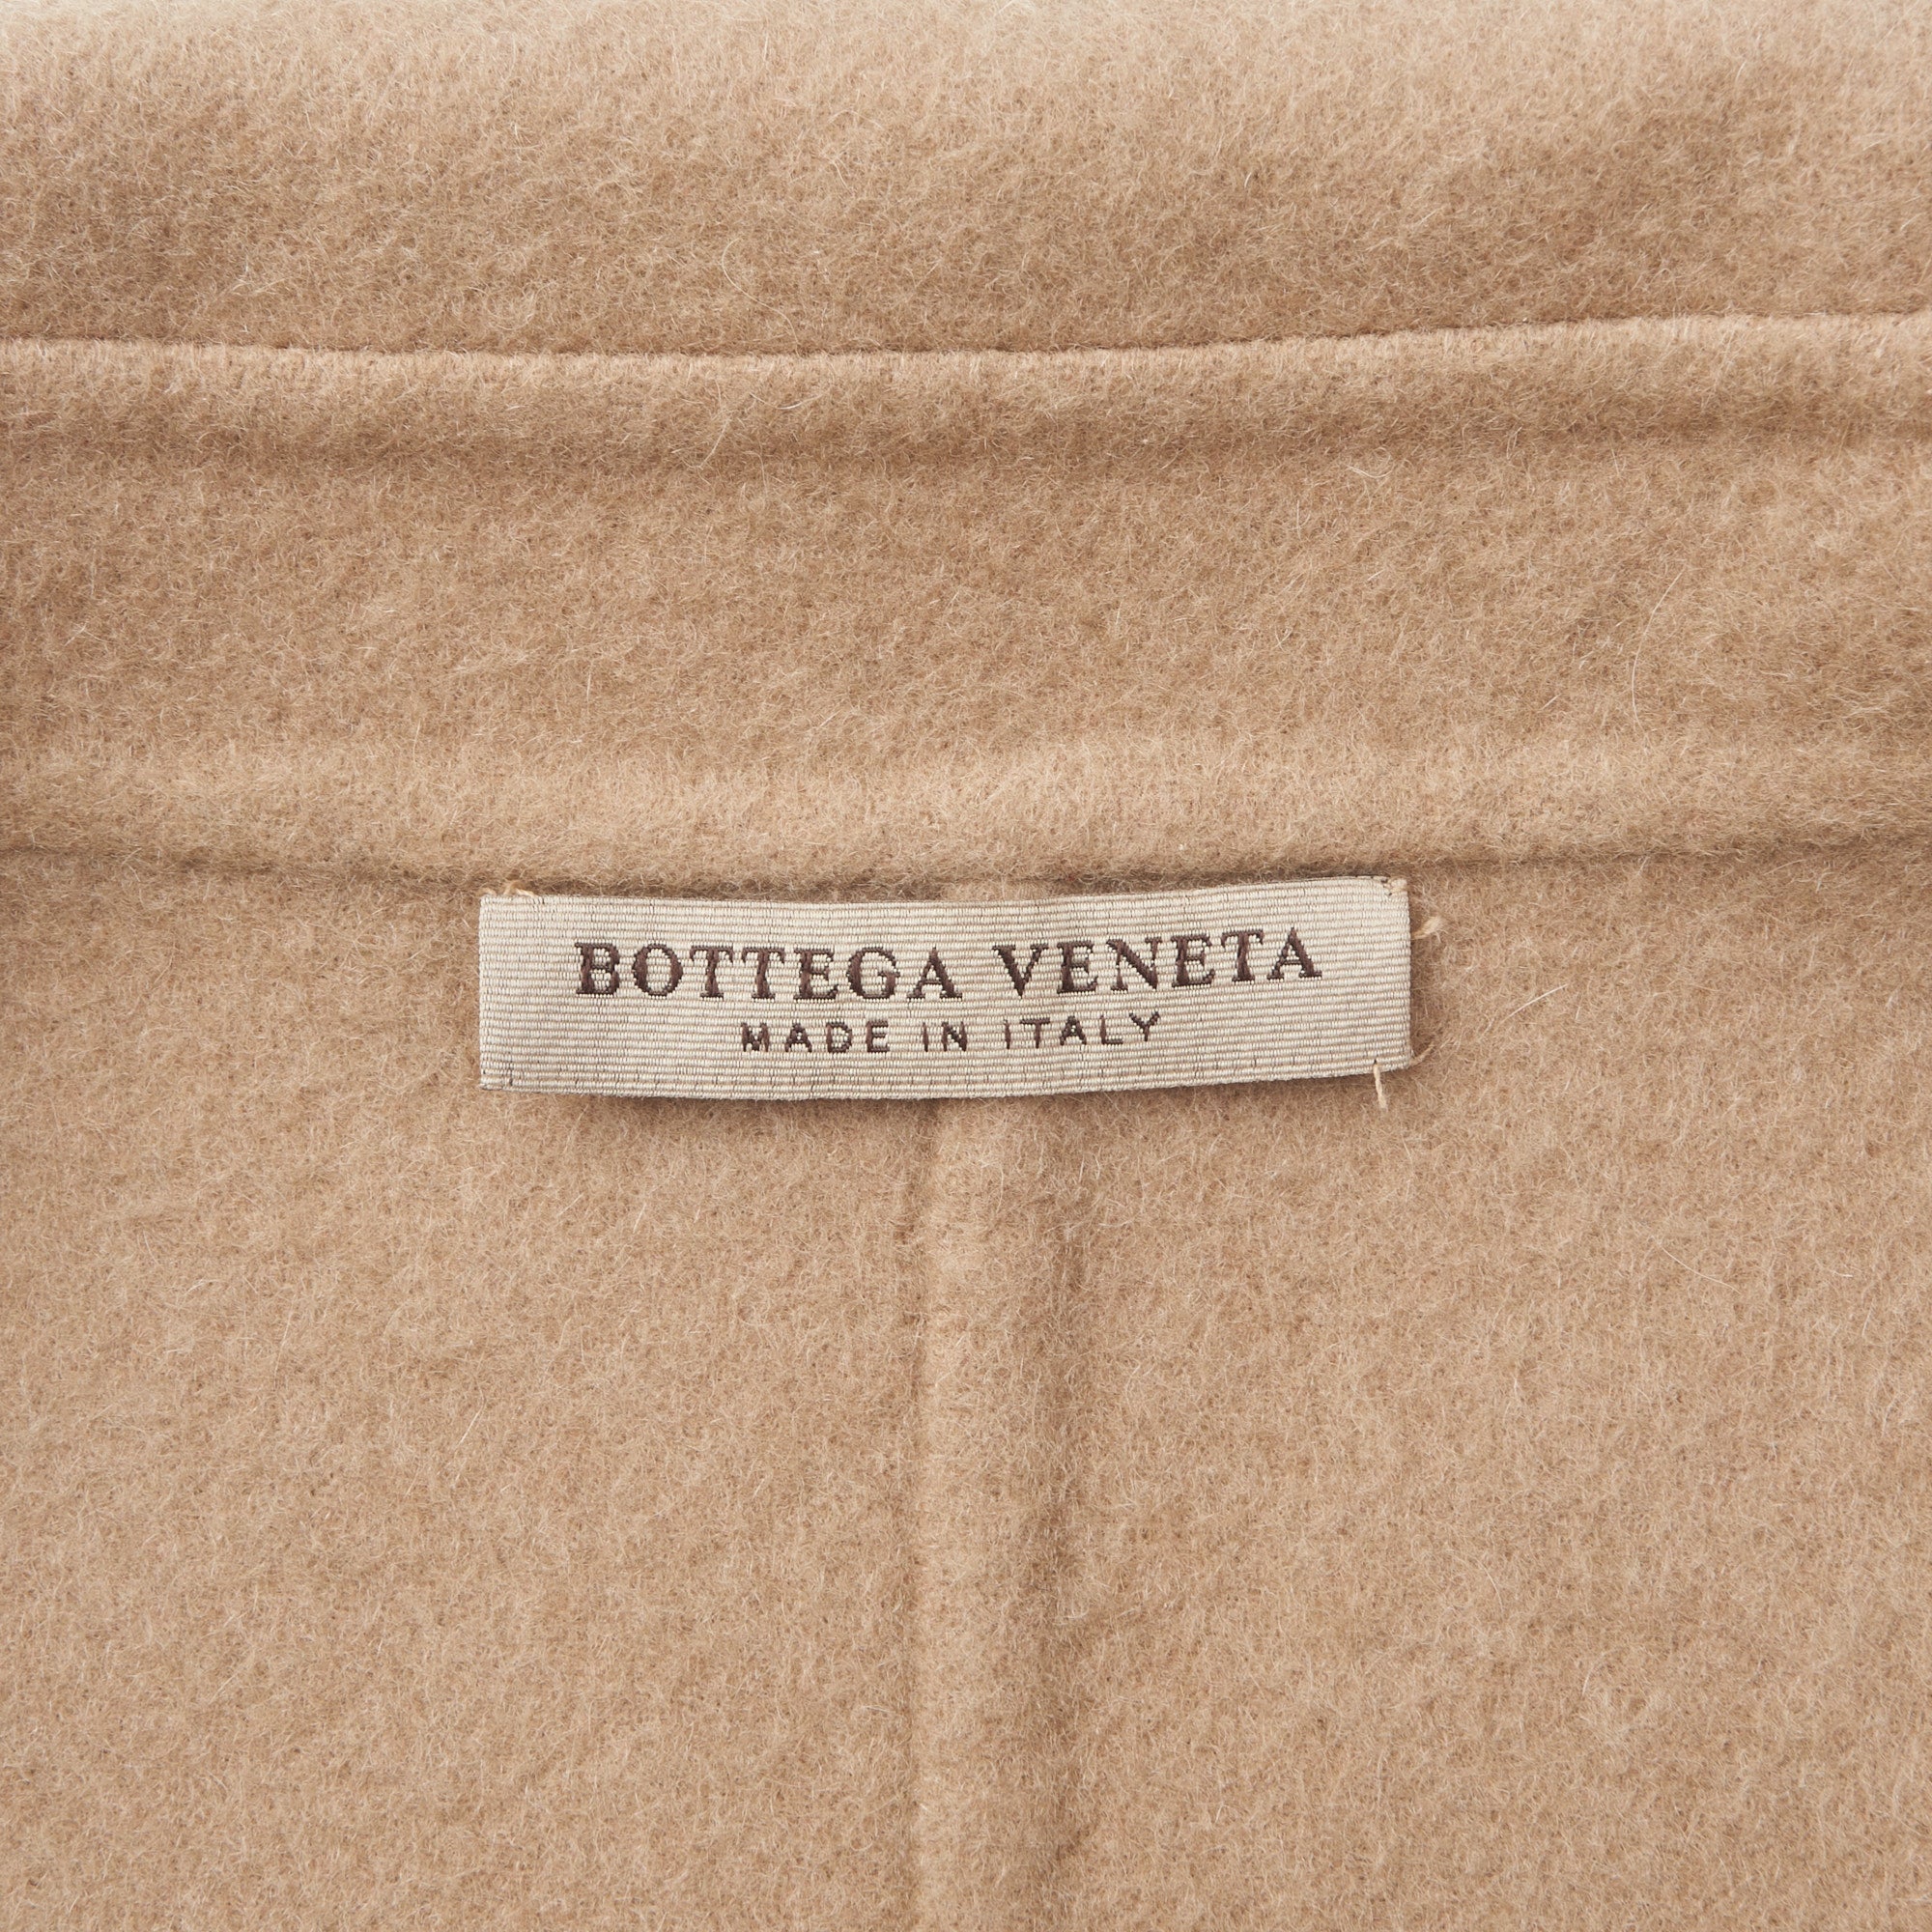 Bottega Veneta is launching virtual residency to keep us inspired